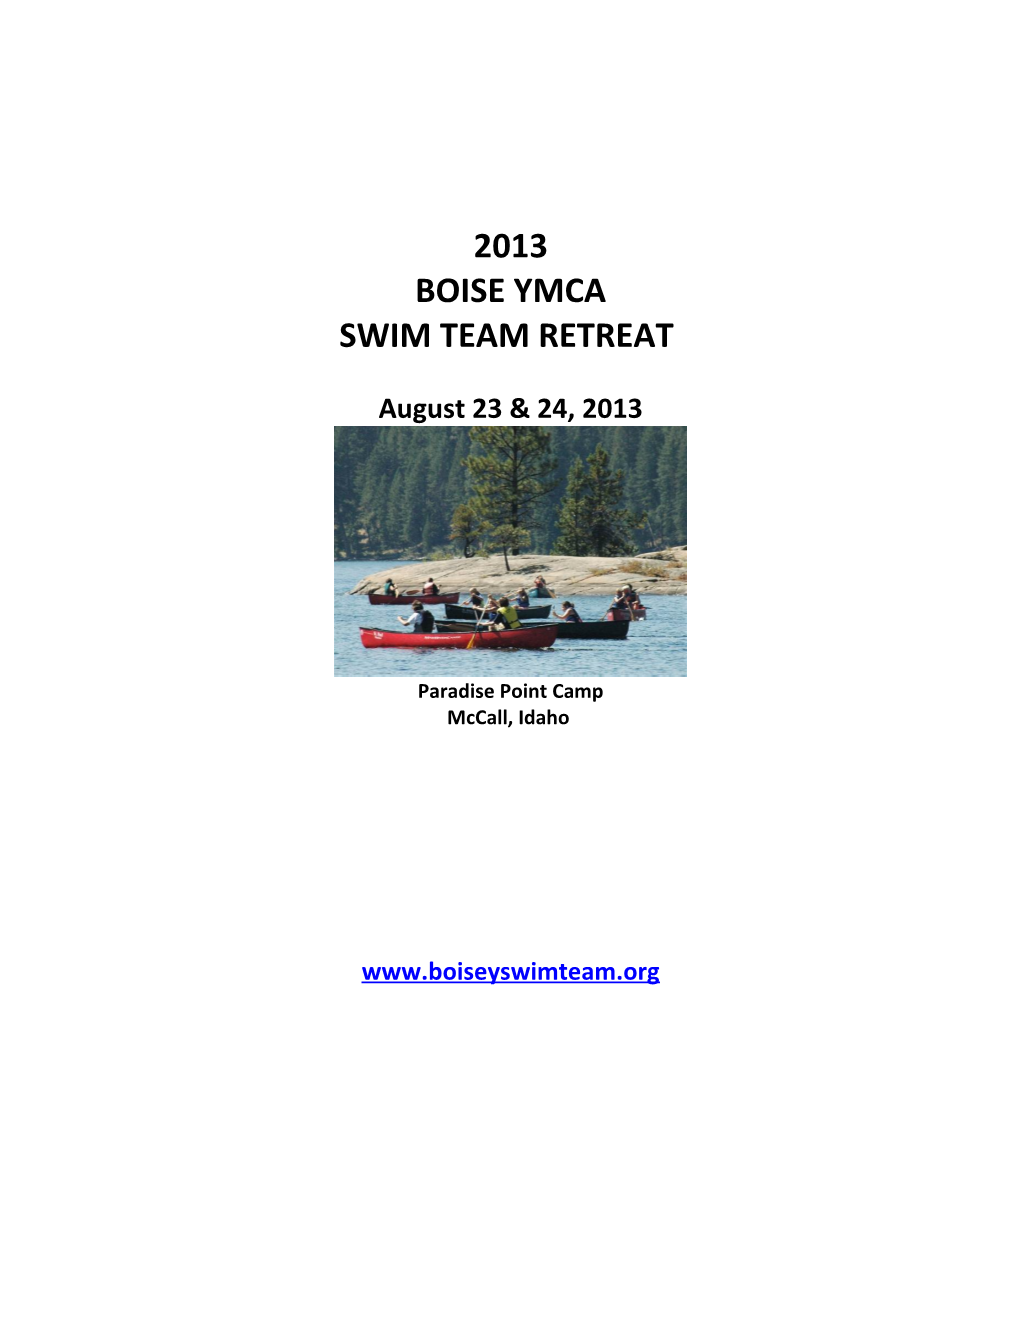 Swim Team Retreat